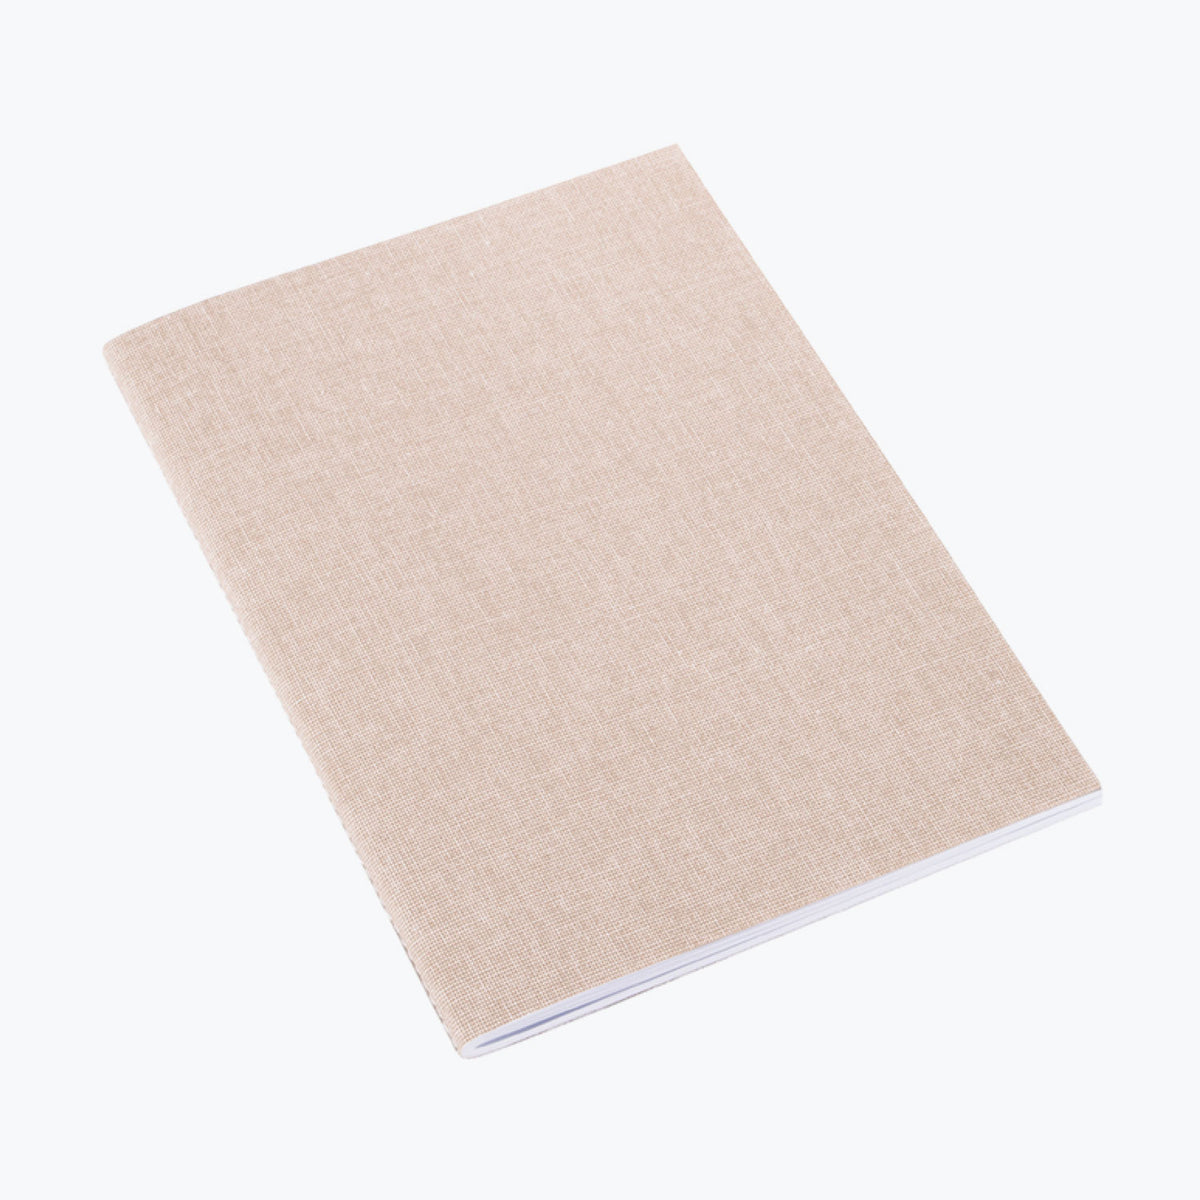 Bookbinders Design - Notebook - Stitched - A4 - Sandbrown